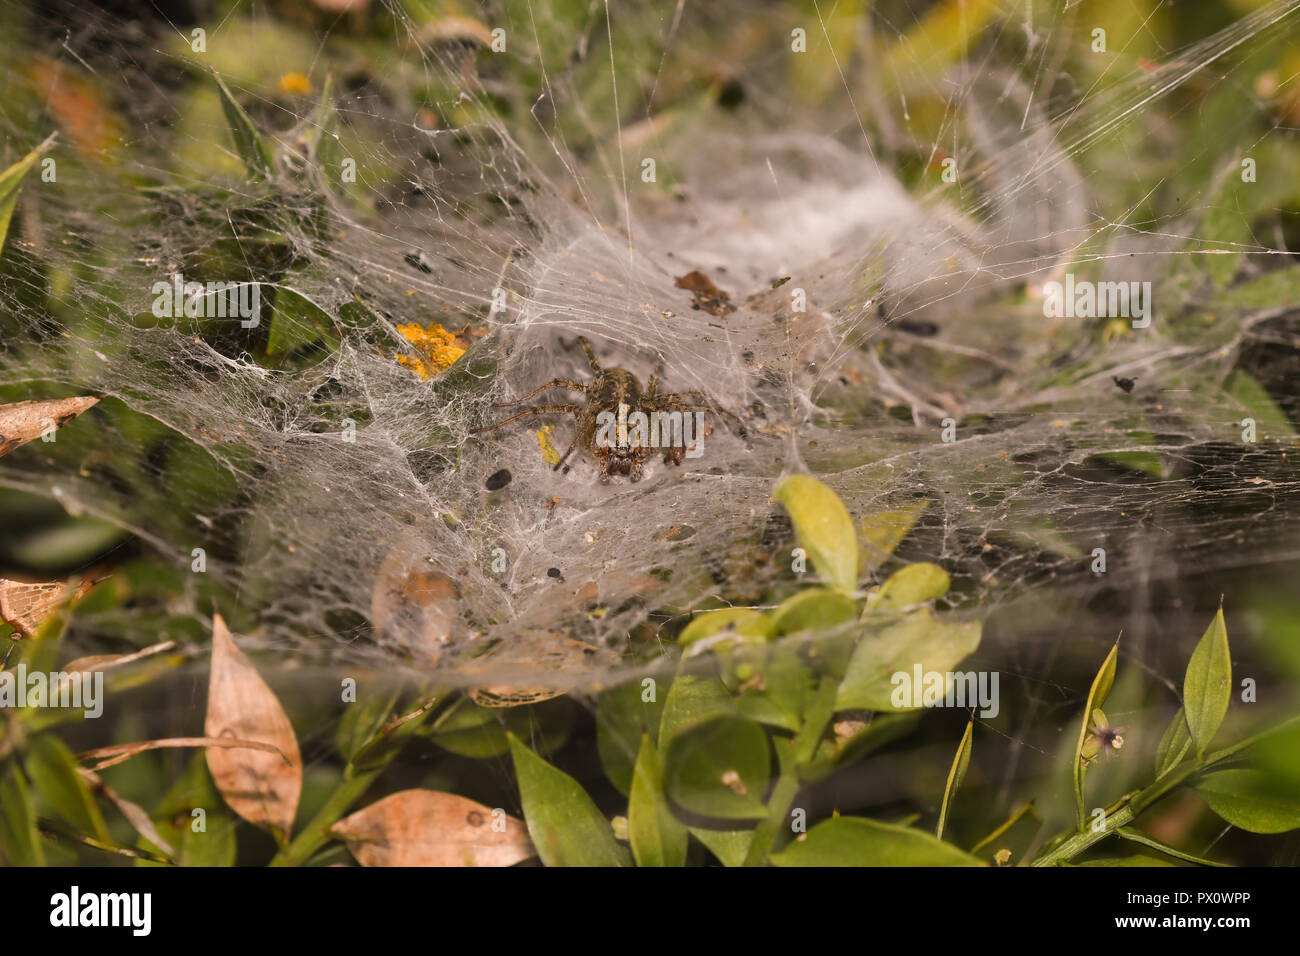 Embudo de pasto-Weaver en su tela de araña Foto de stock